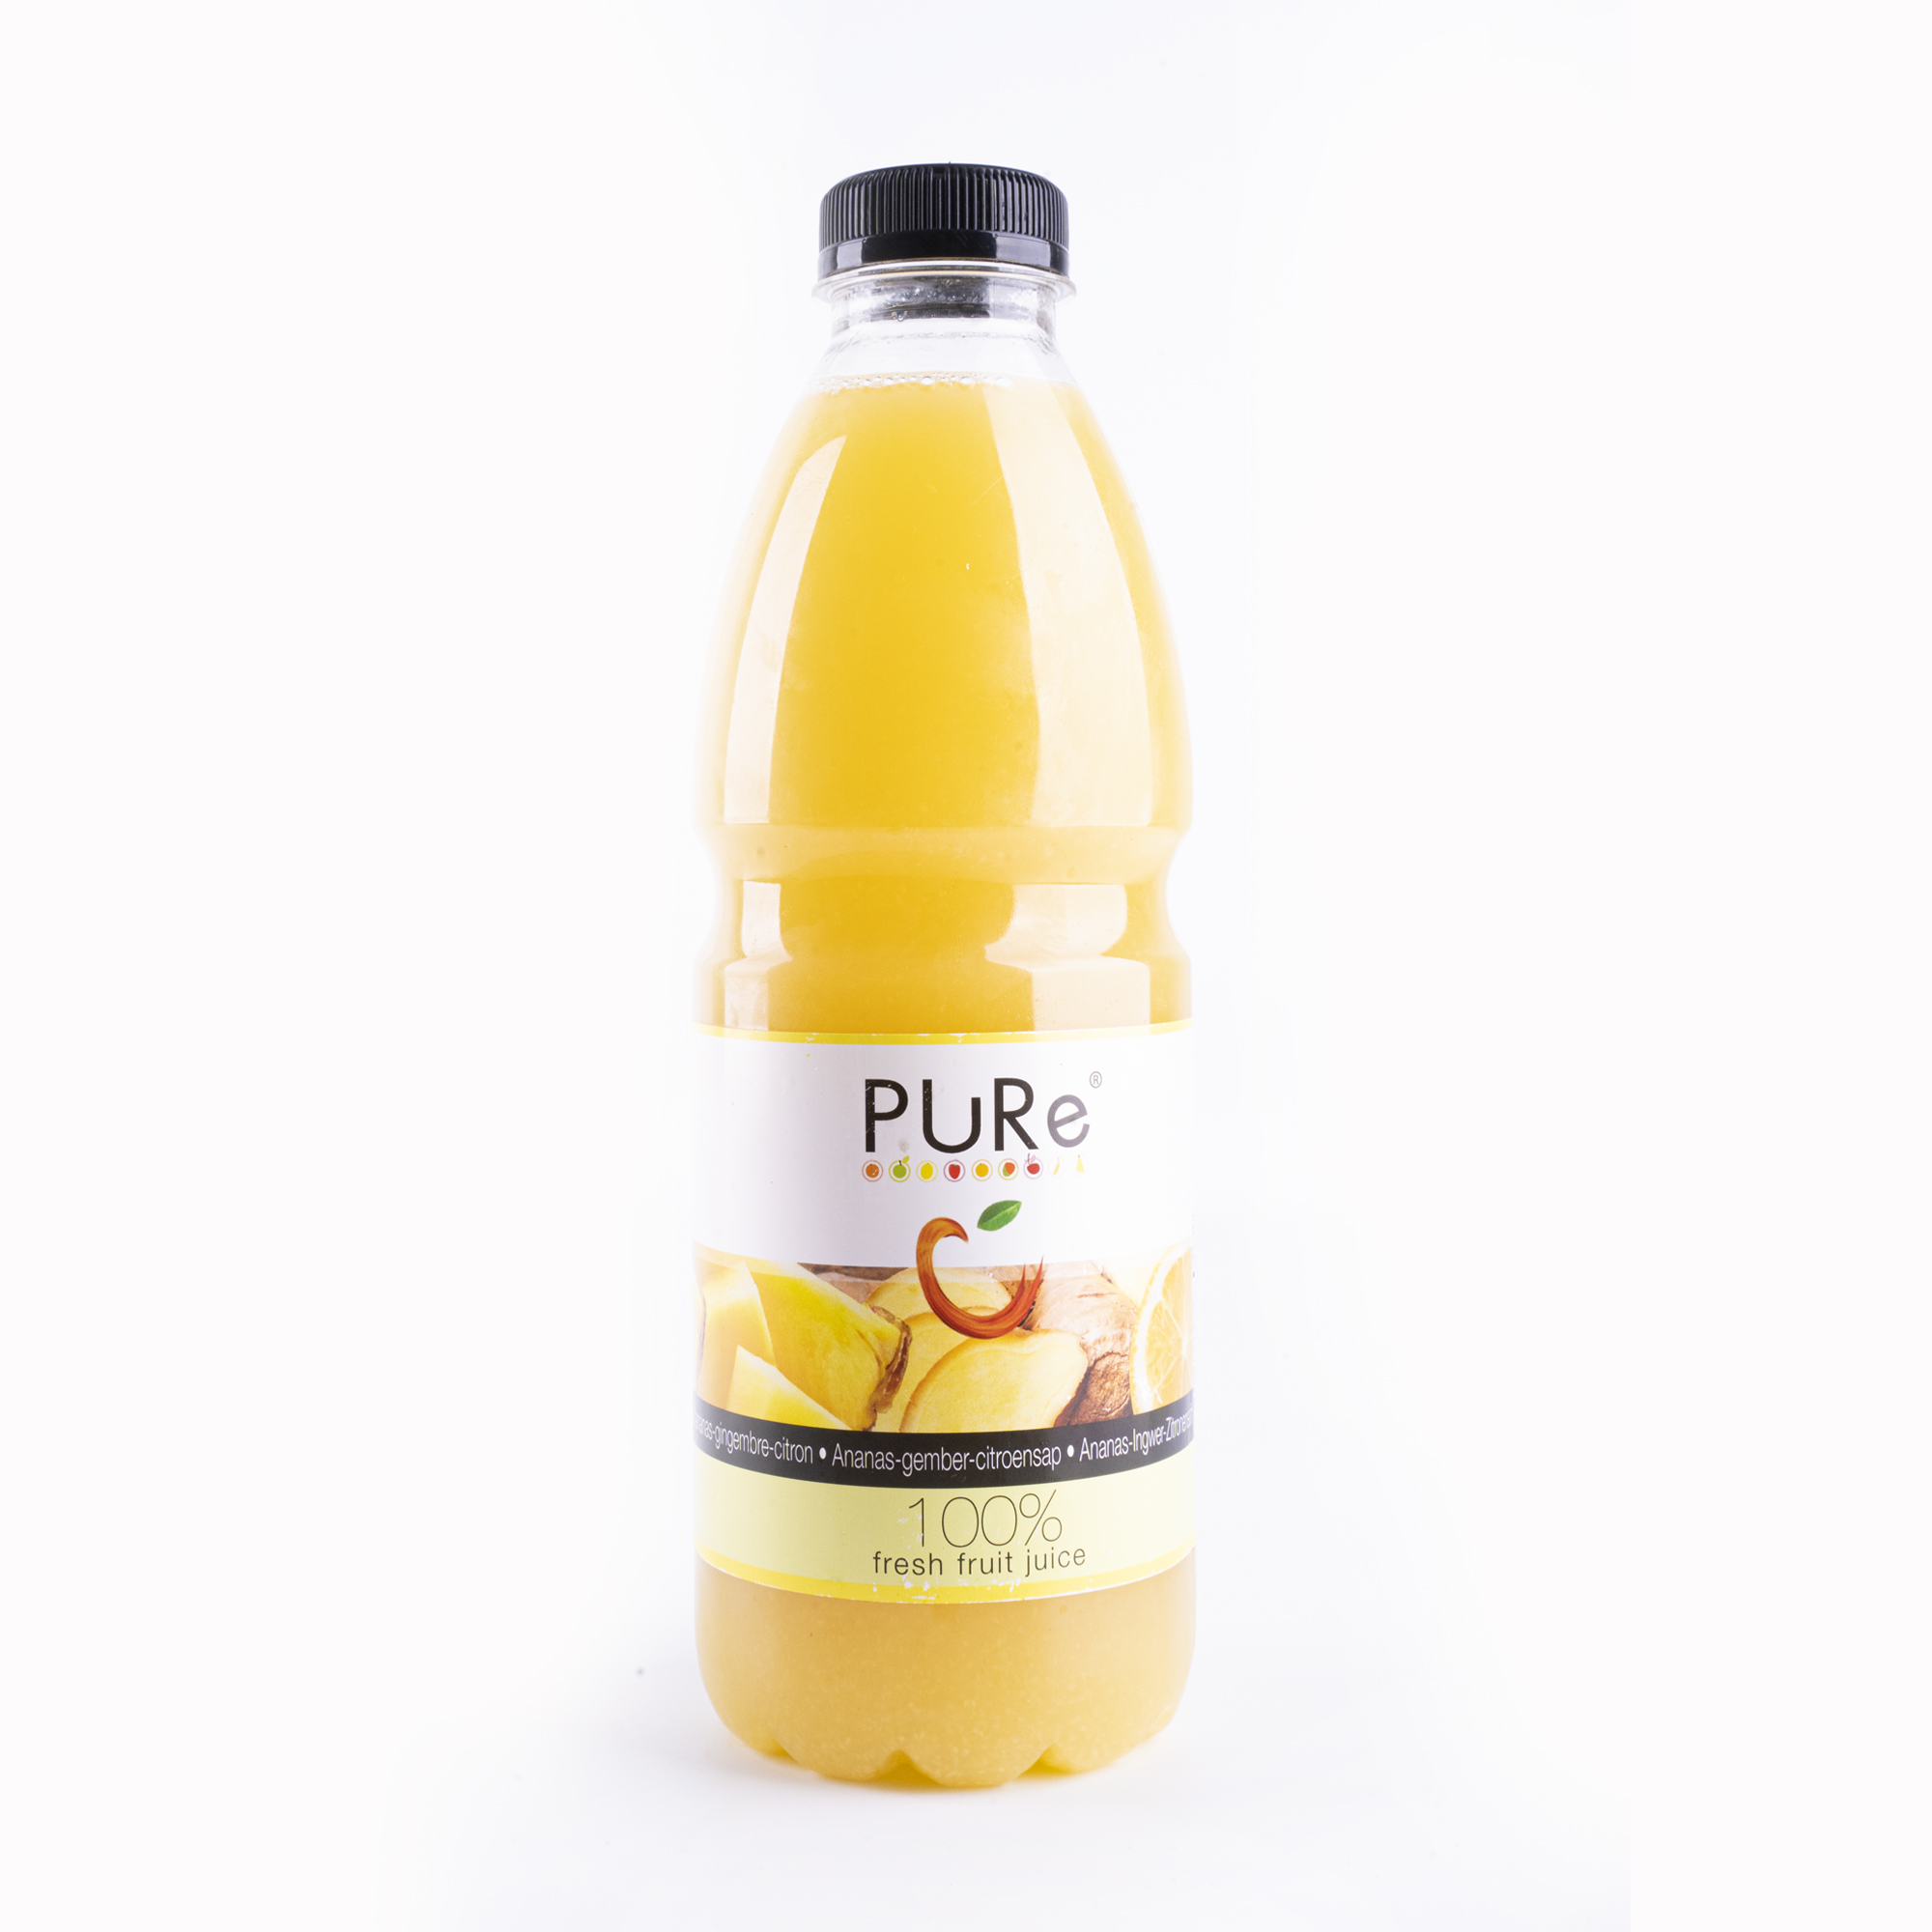 The Juicy Group - Pure - Sap van ananas-gember-citroen - Pure HPP 1L.